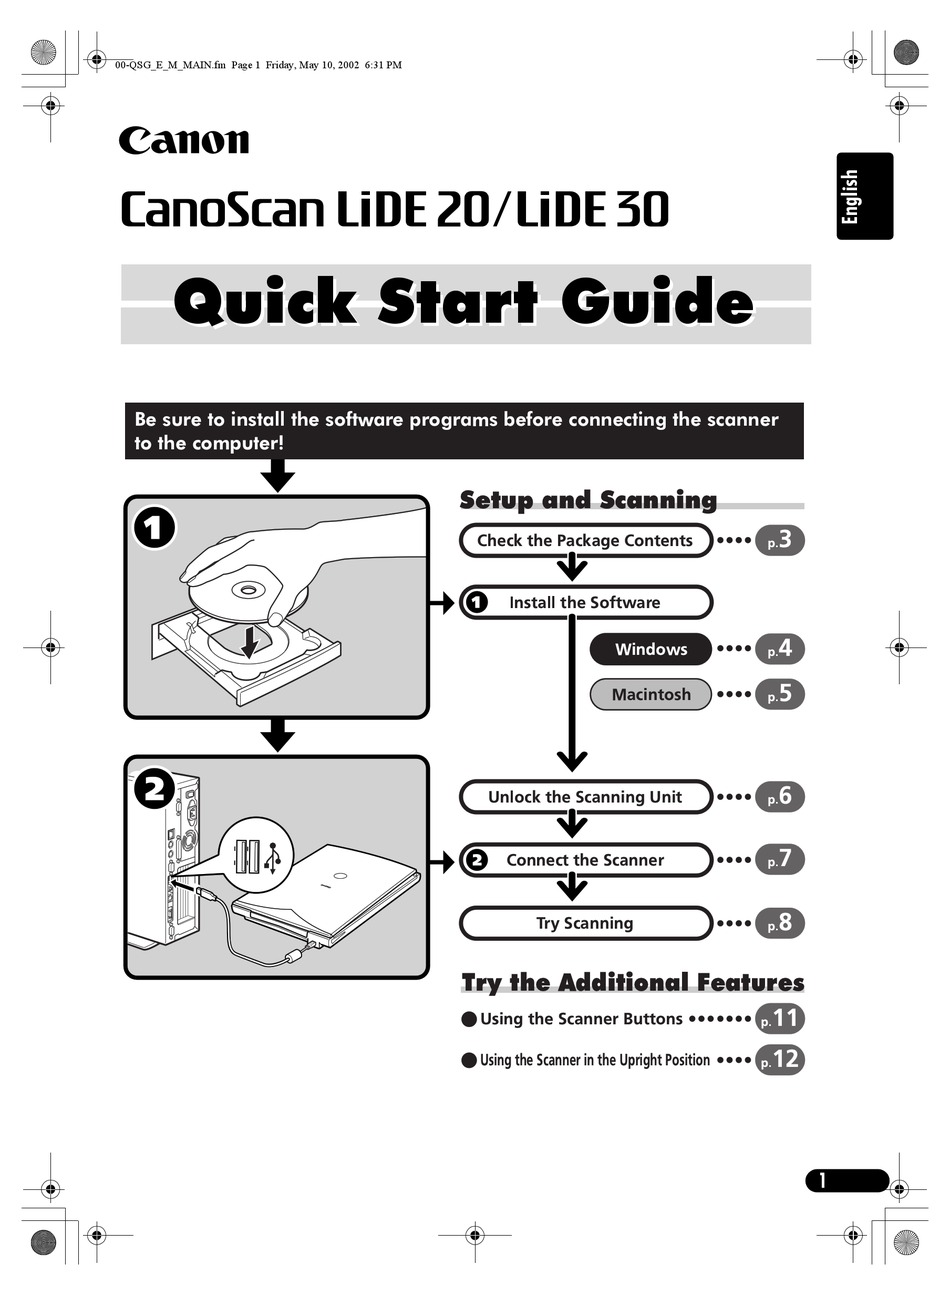 CANON CANOSCAN LIDE 20 SCANNER QUICK START MANUAL | ManualsLib